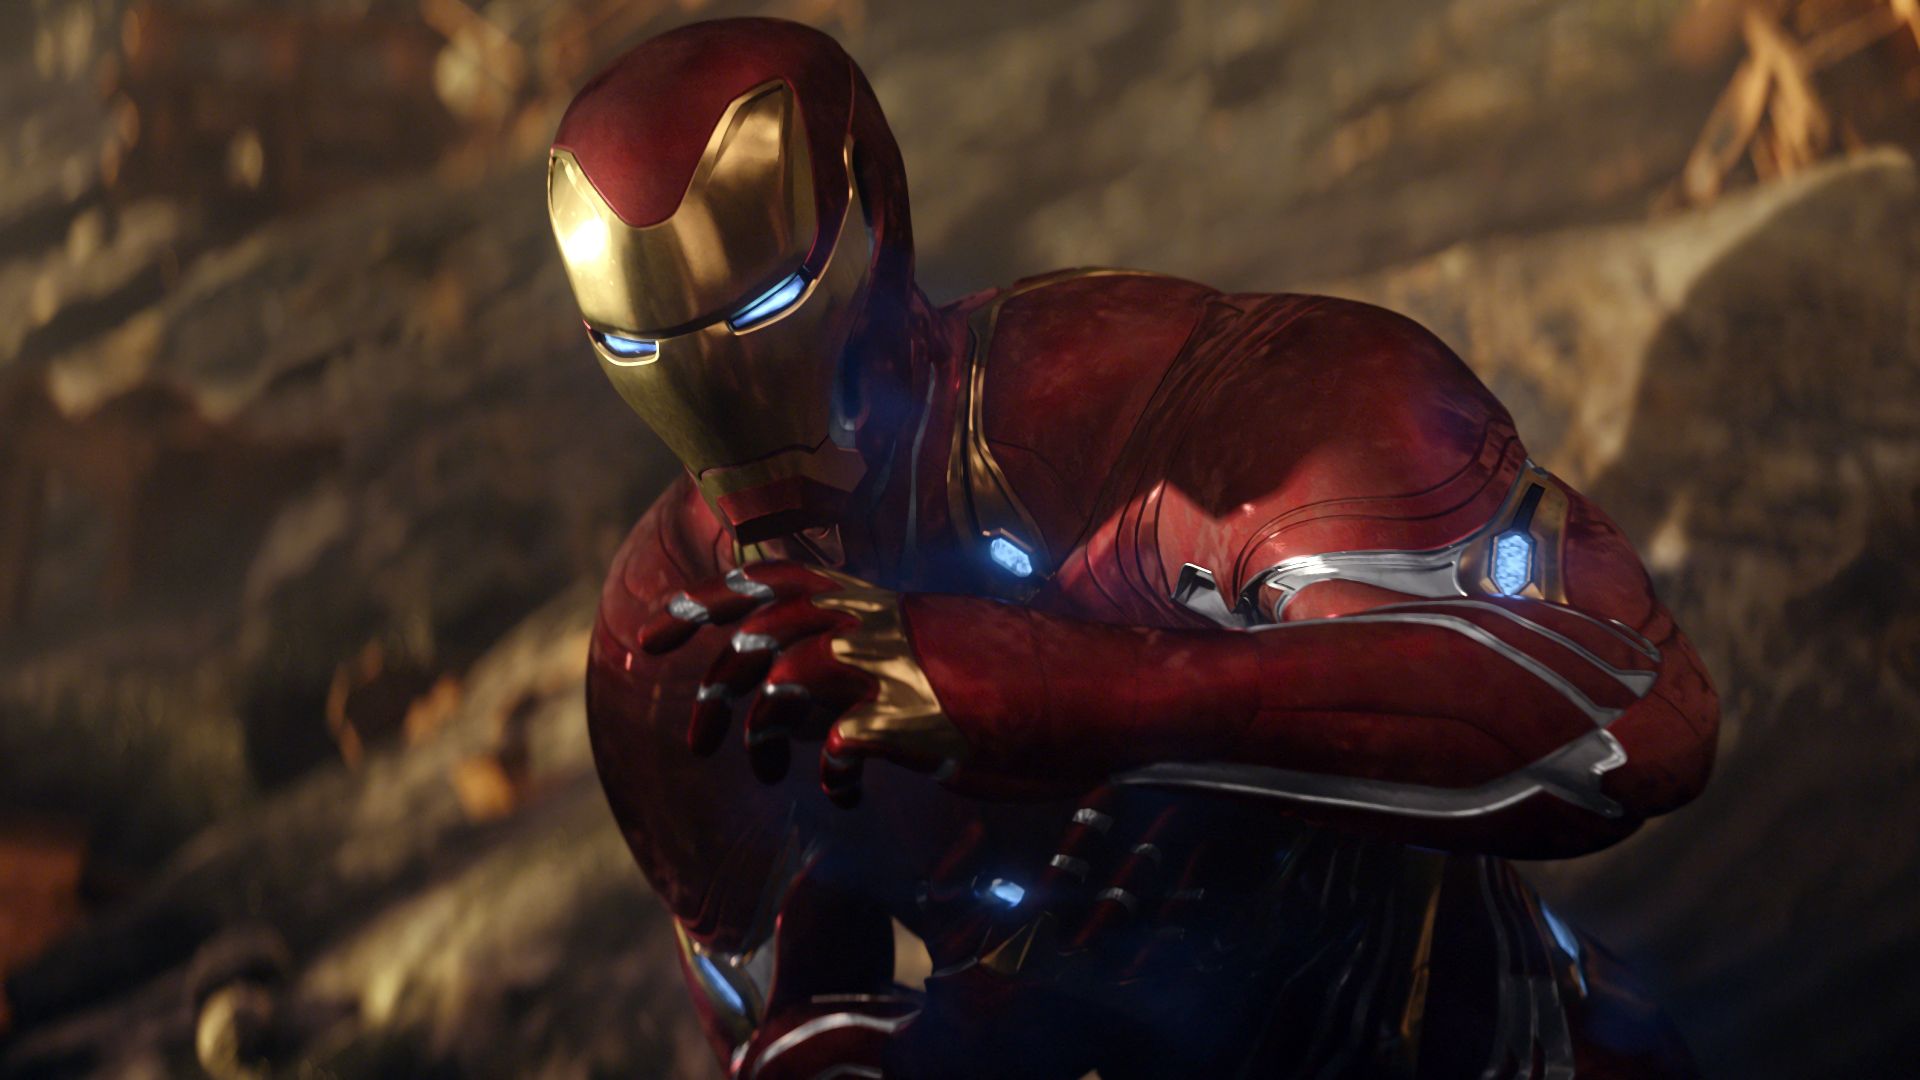 Wallpaper Avengers: Infinity War, Iron Man, 4k, Movies #17800